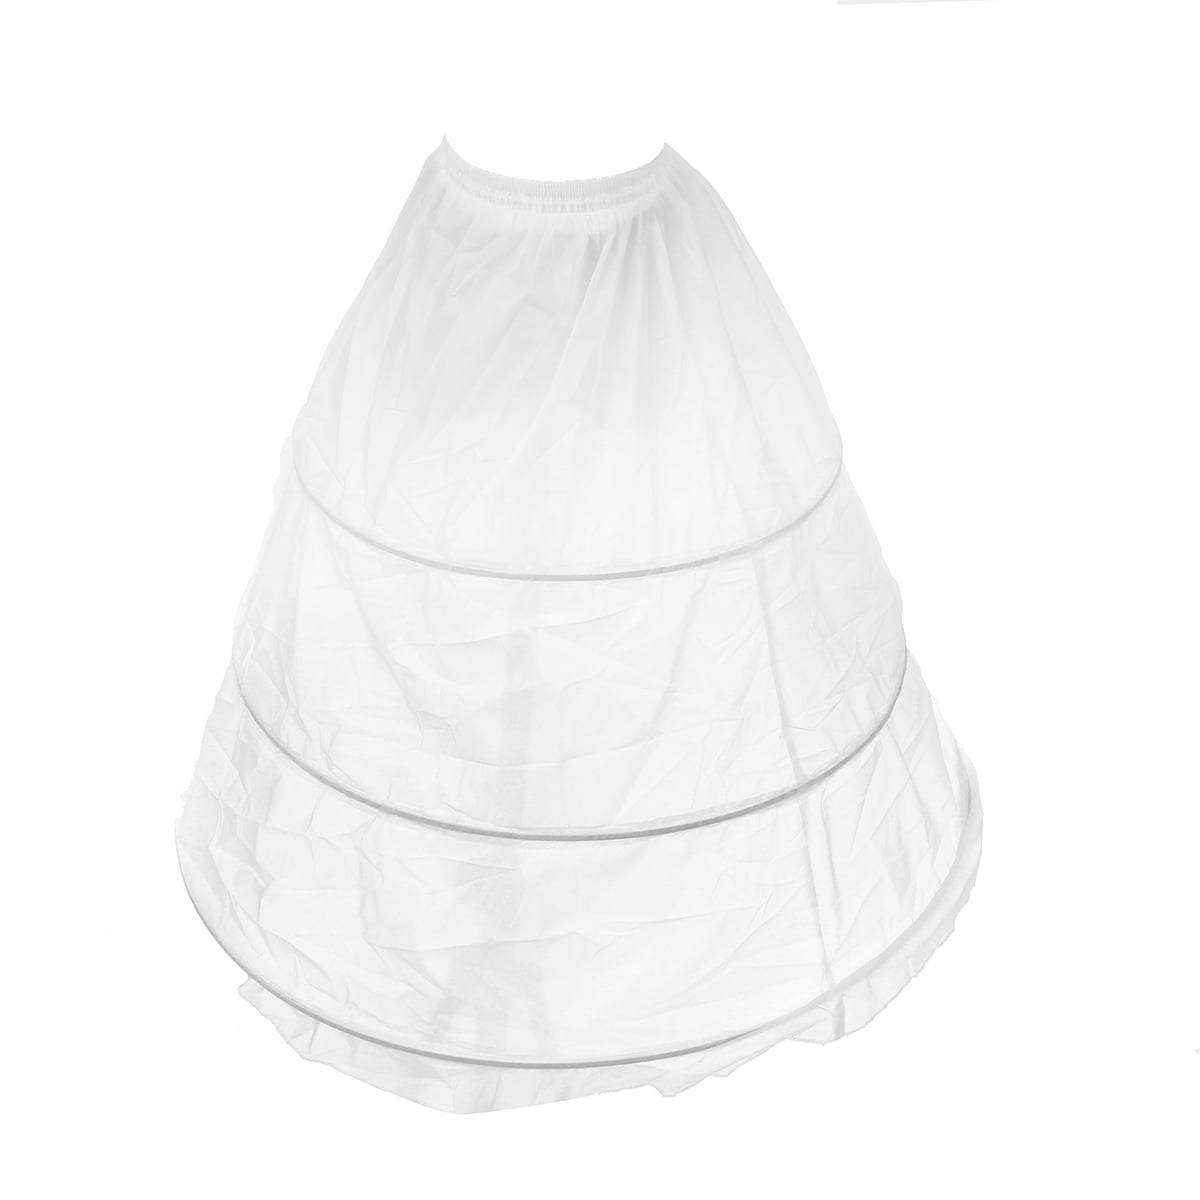 AW Wedding Petticoat Half Slip Hoopless A-line Elastic Crinoline Underskirt